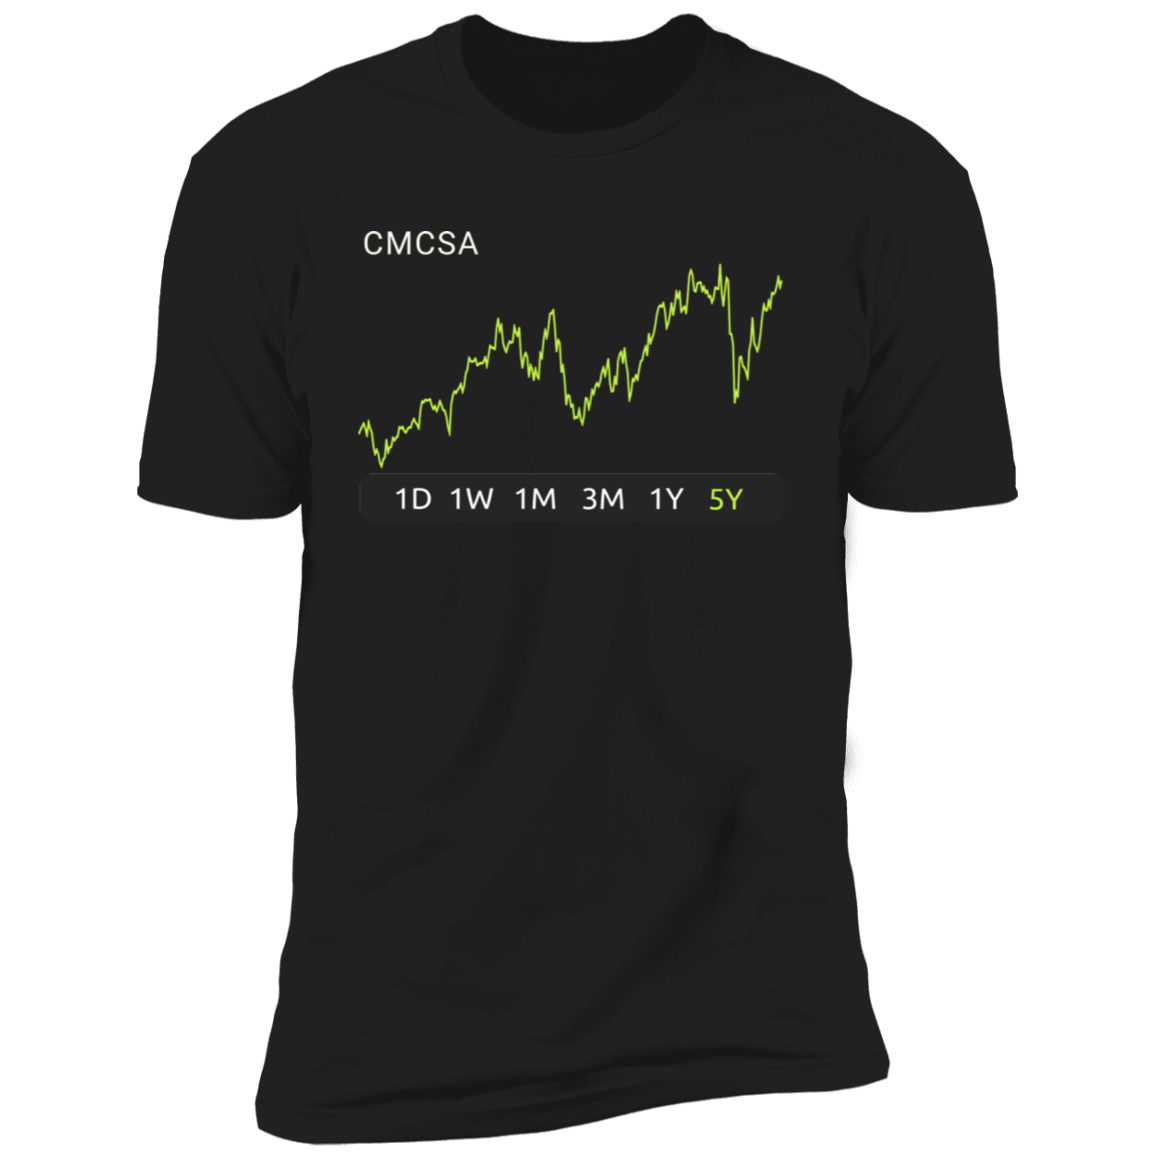 CMCSA Stock 5y Premium T-Shirt